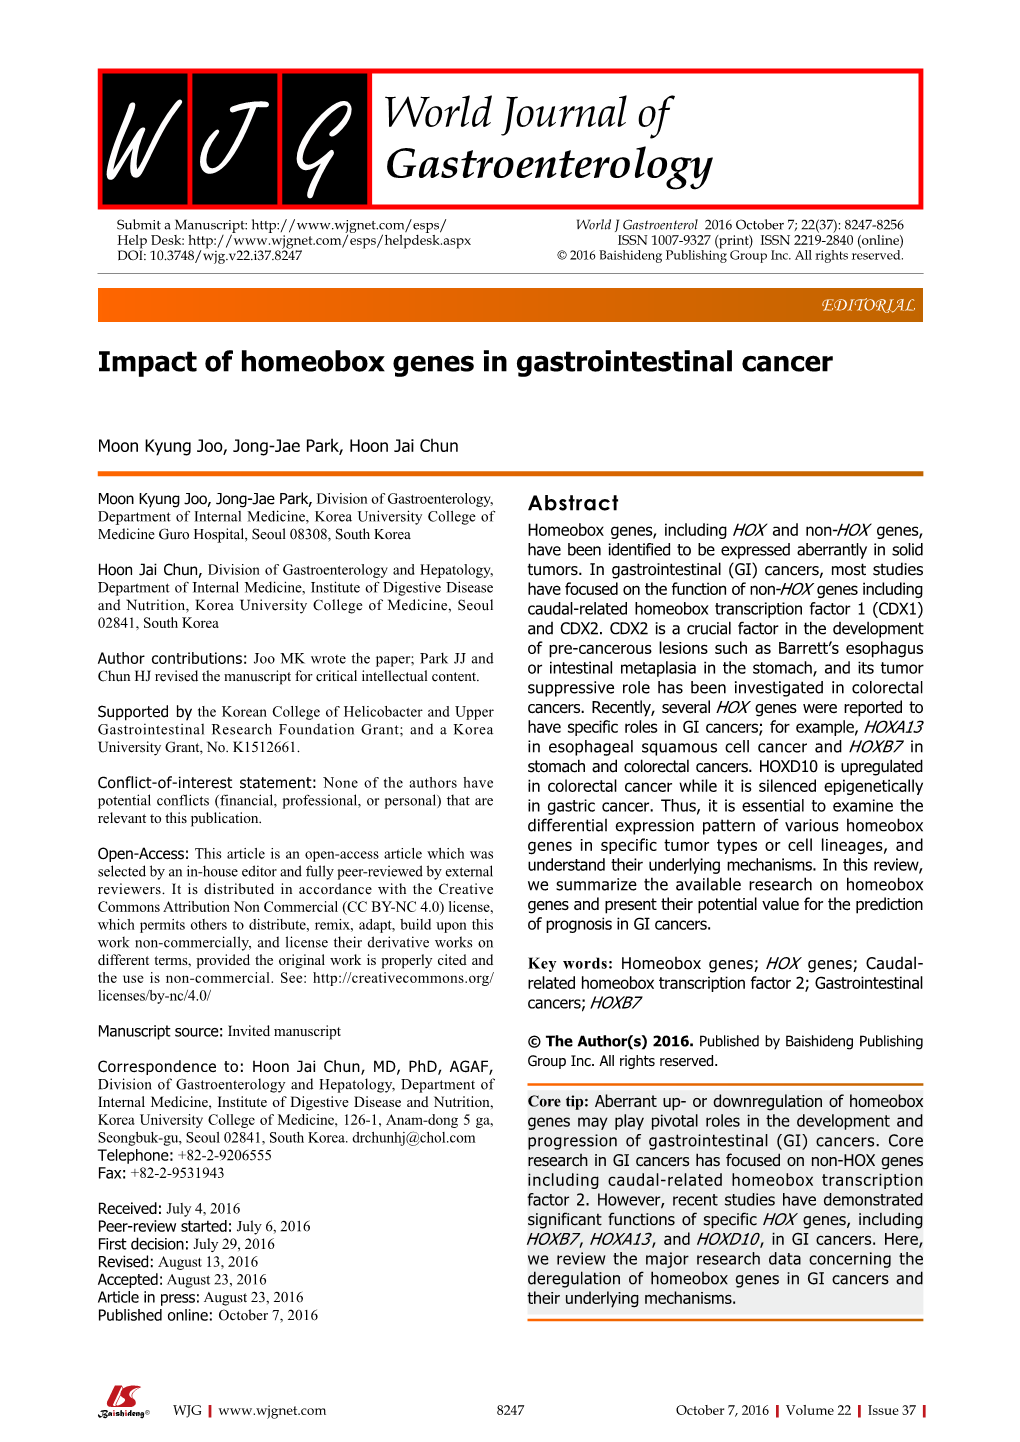 Impact of Homeobox Genes in Gastrointestinal Cancer